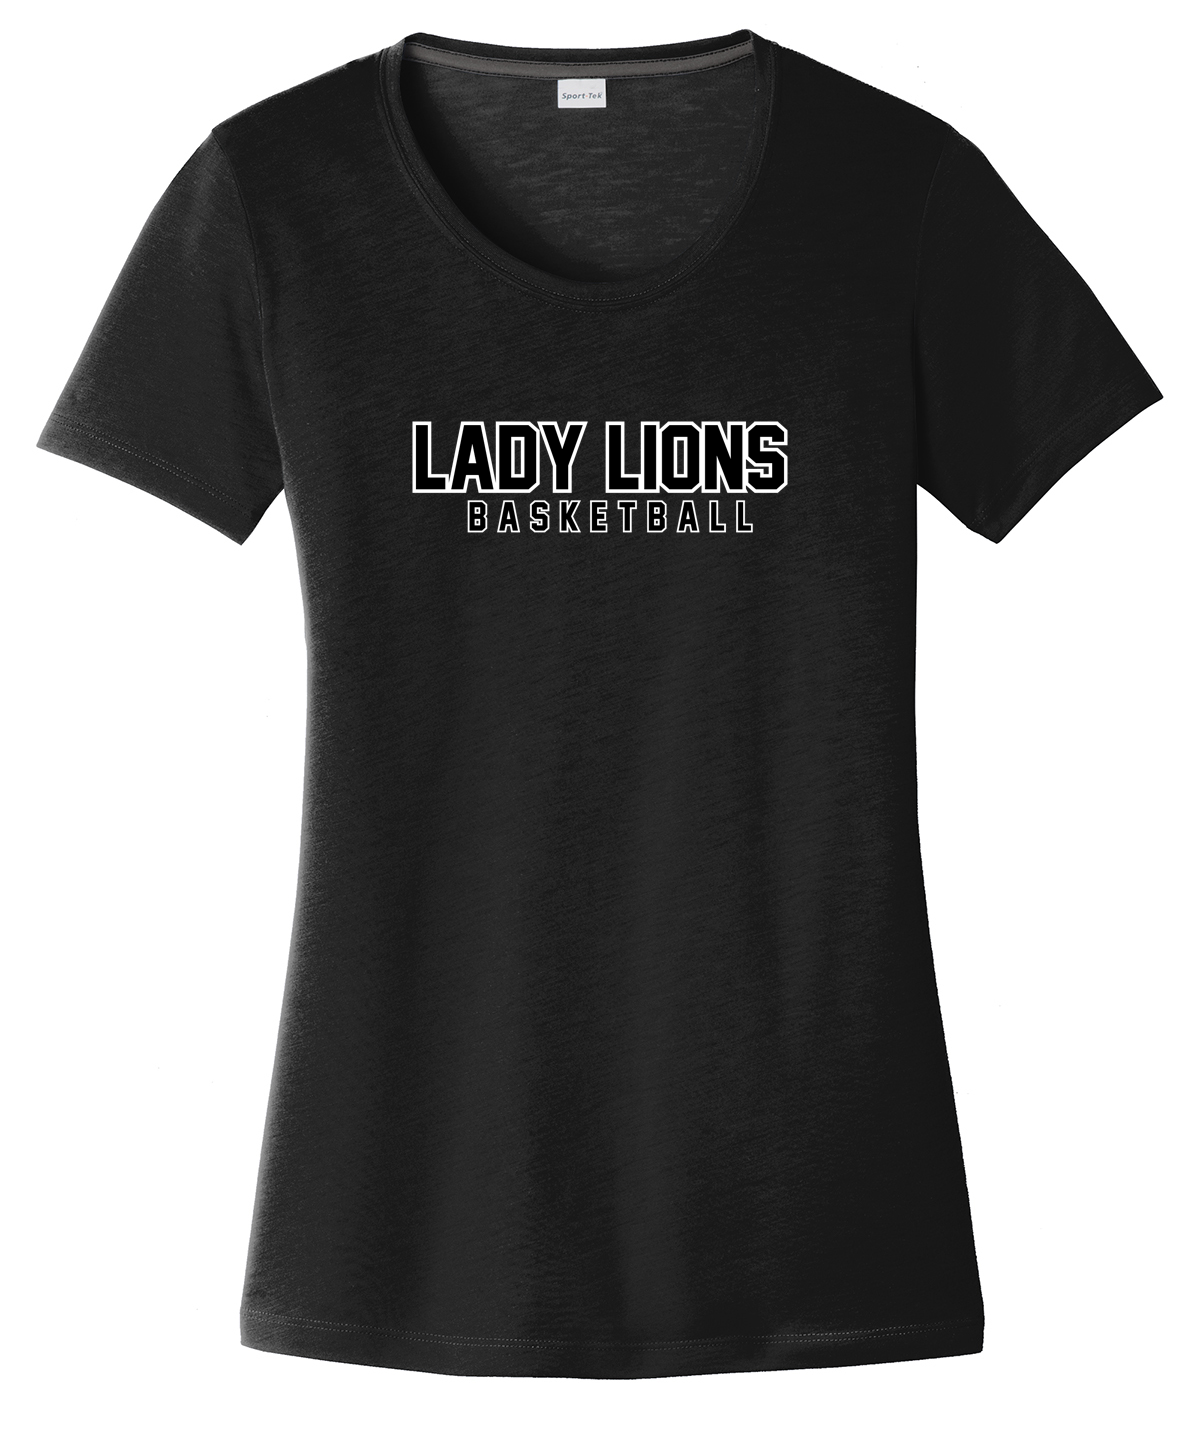 Lady Lions Basketball Women's CottonTouch Performance T-Shirt